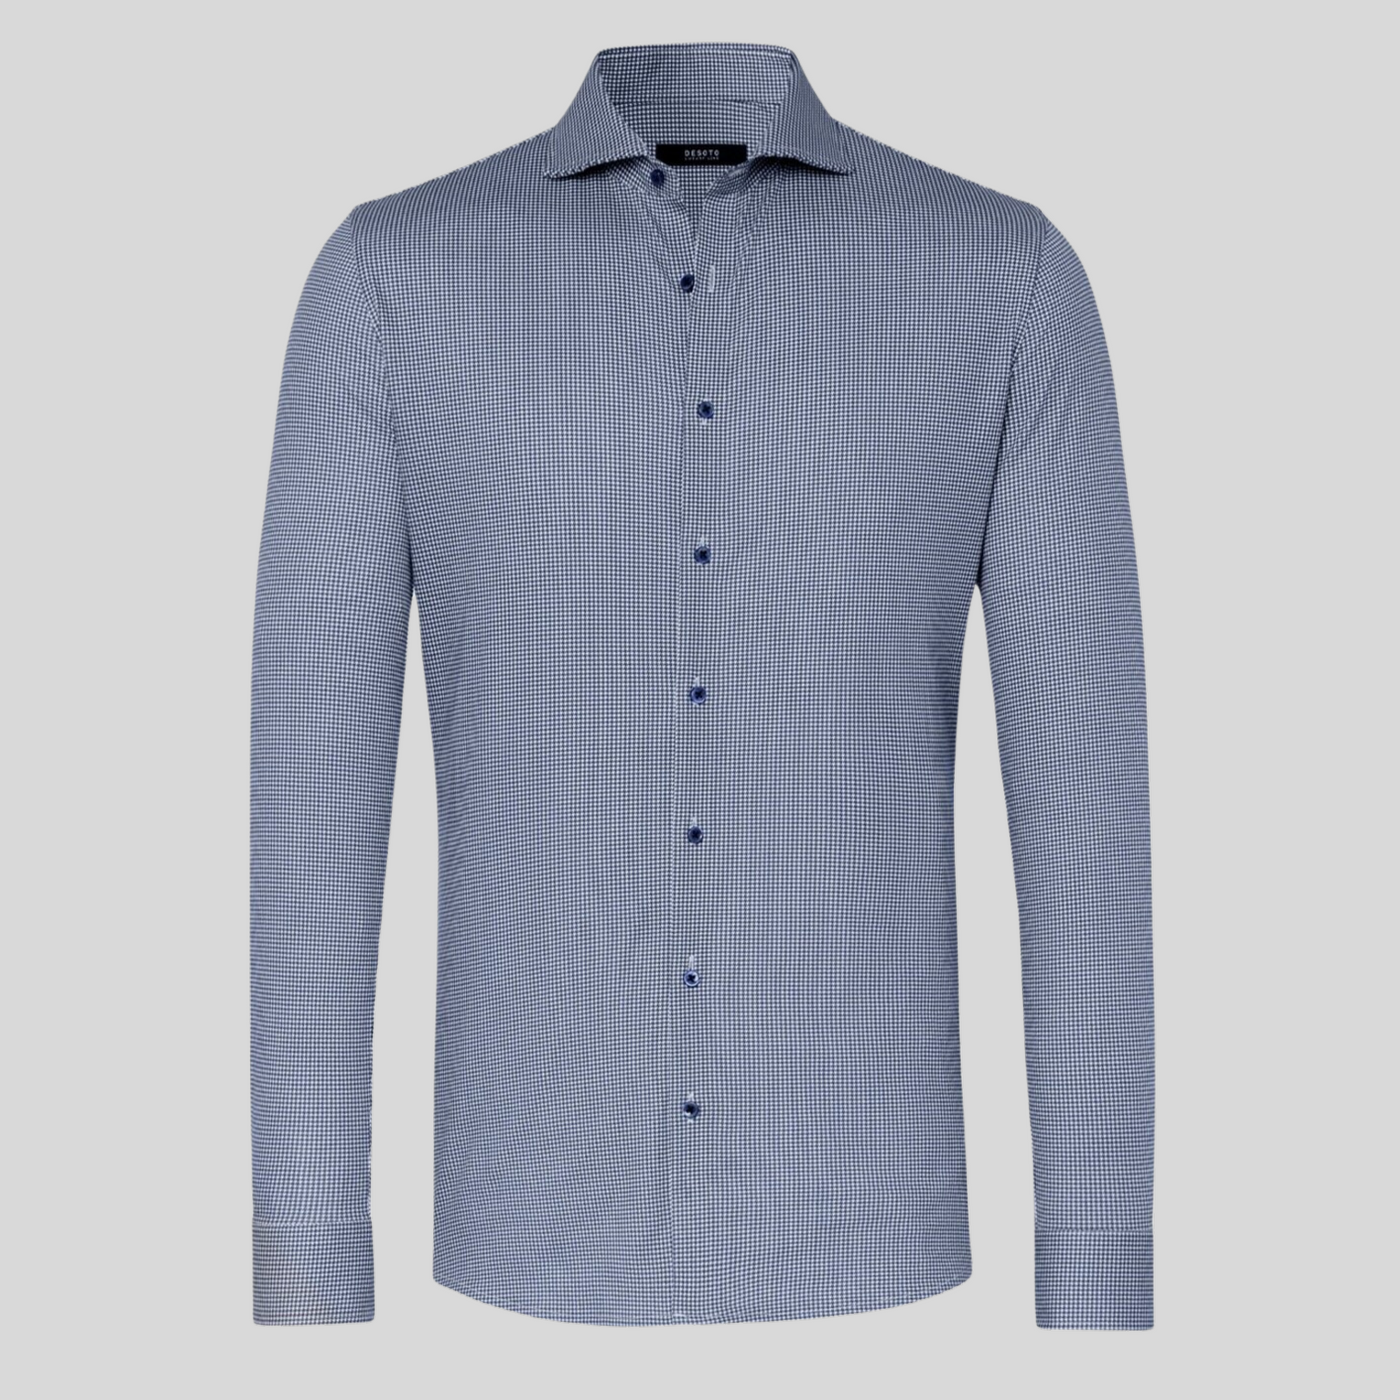 Gotstyle Fashion - Desoto Collar Shirts Mini Houndstooth Jersey Shirt - Navy